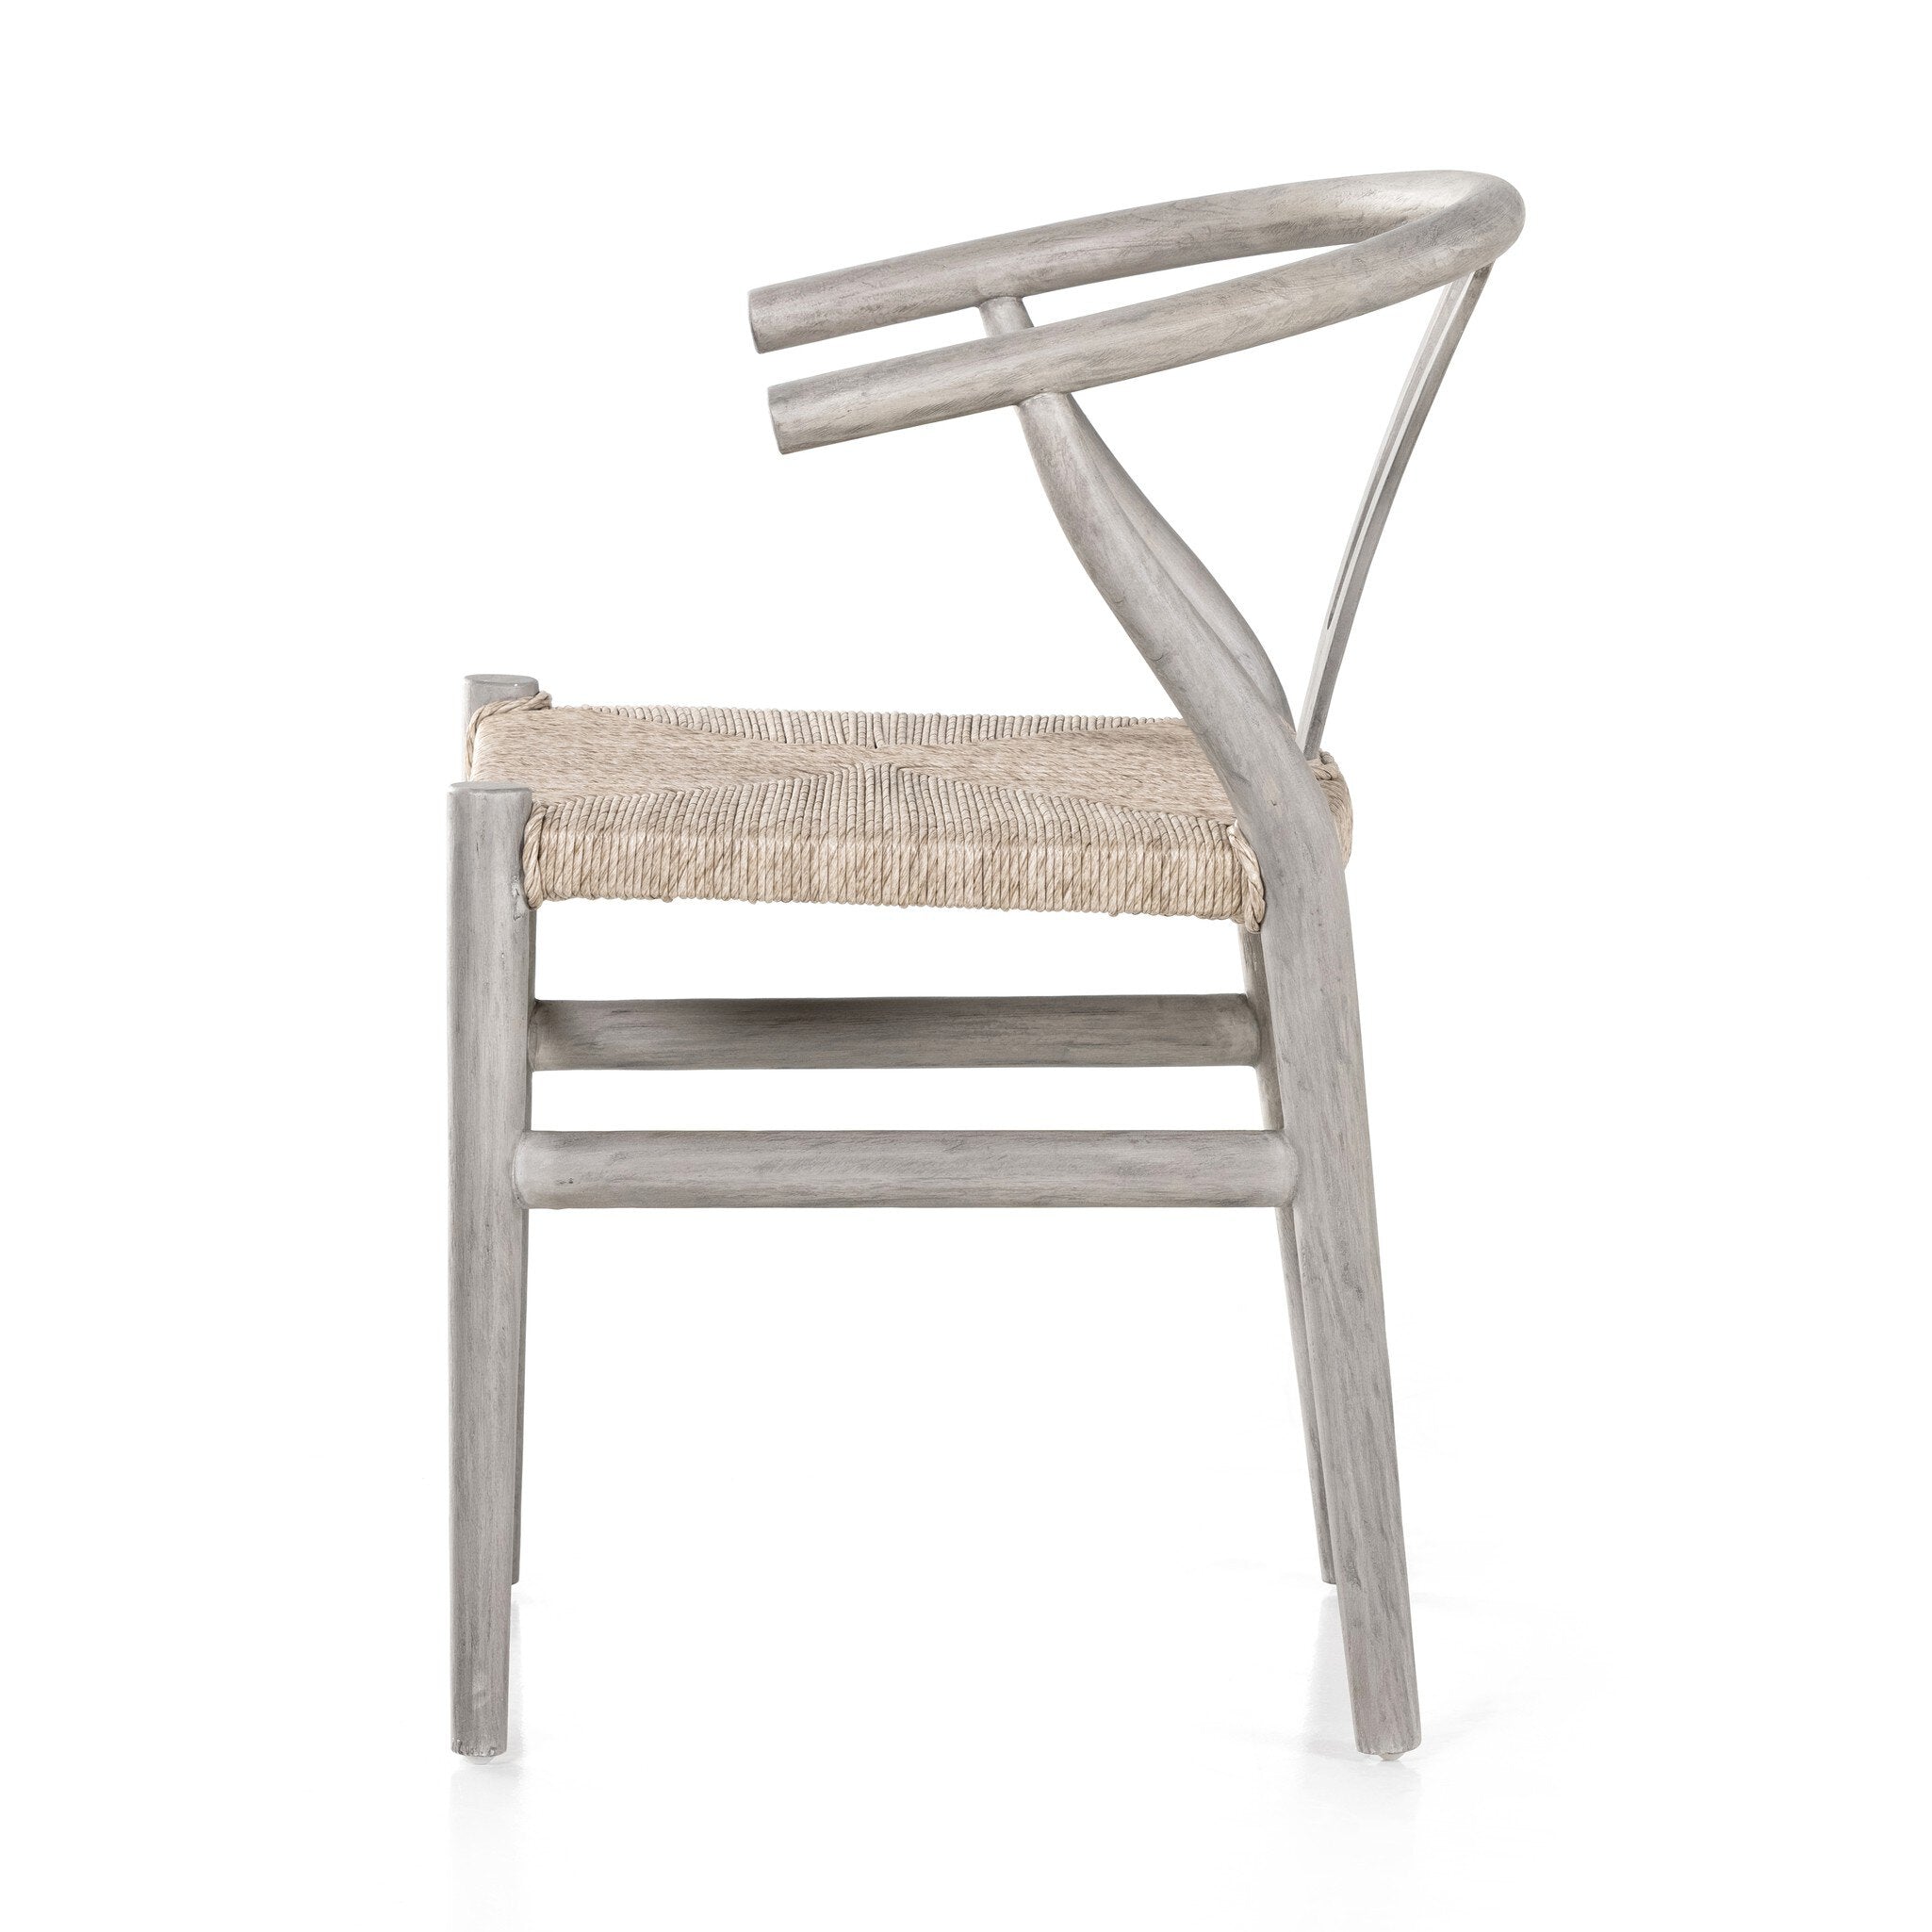 Muestra Dining Chair - Vintage White